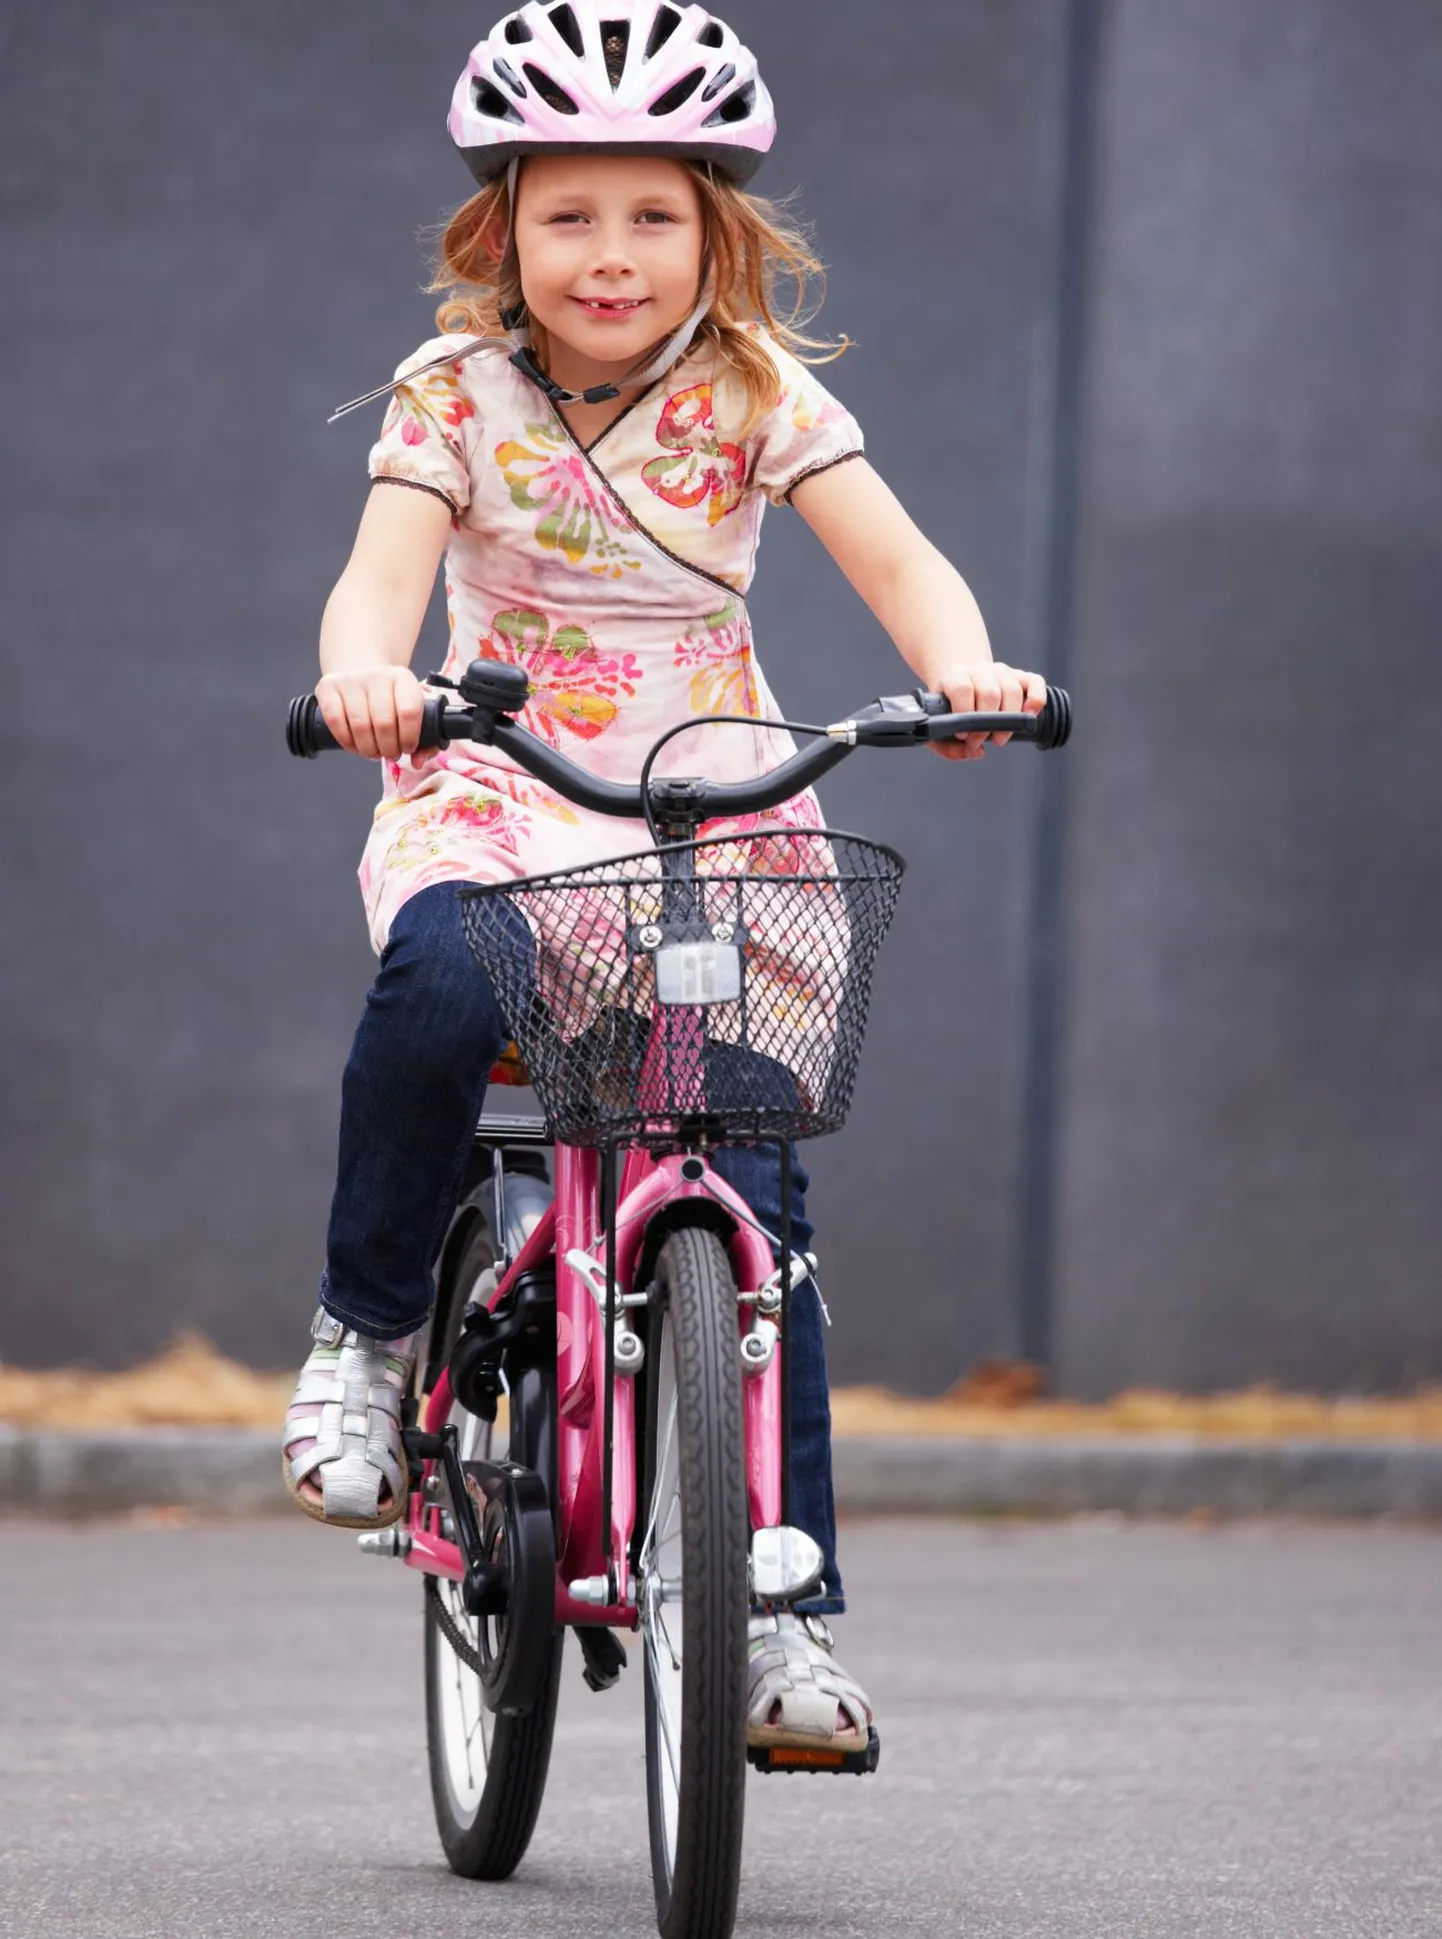 Девочка на велосипеде. Иллюстративное фото.